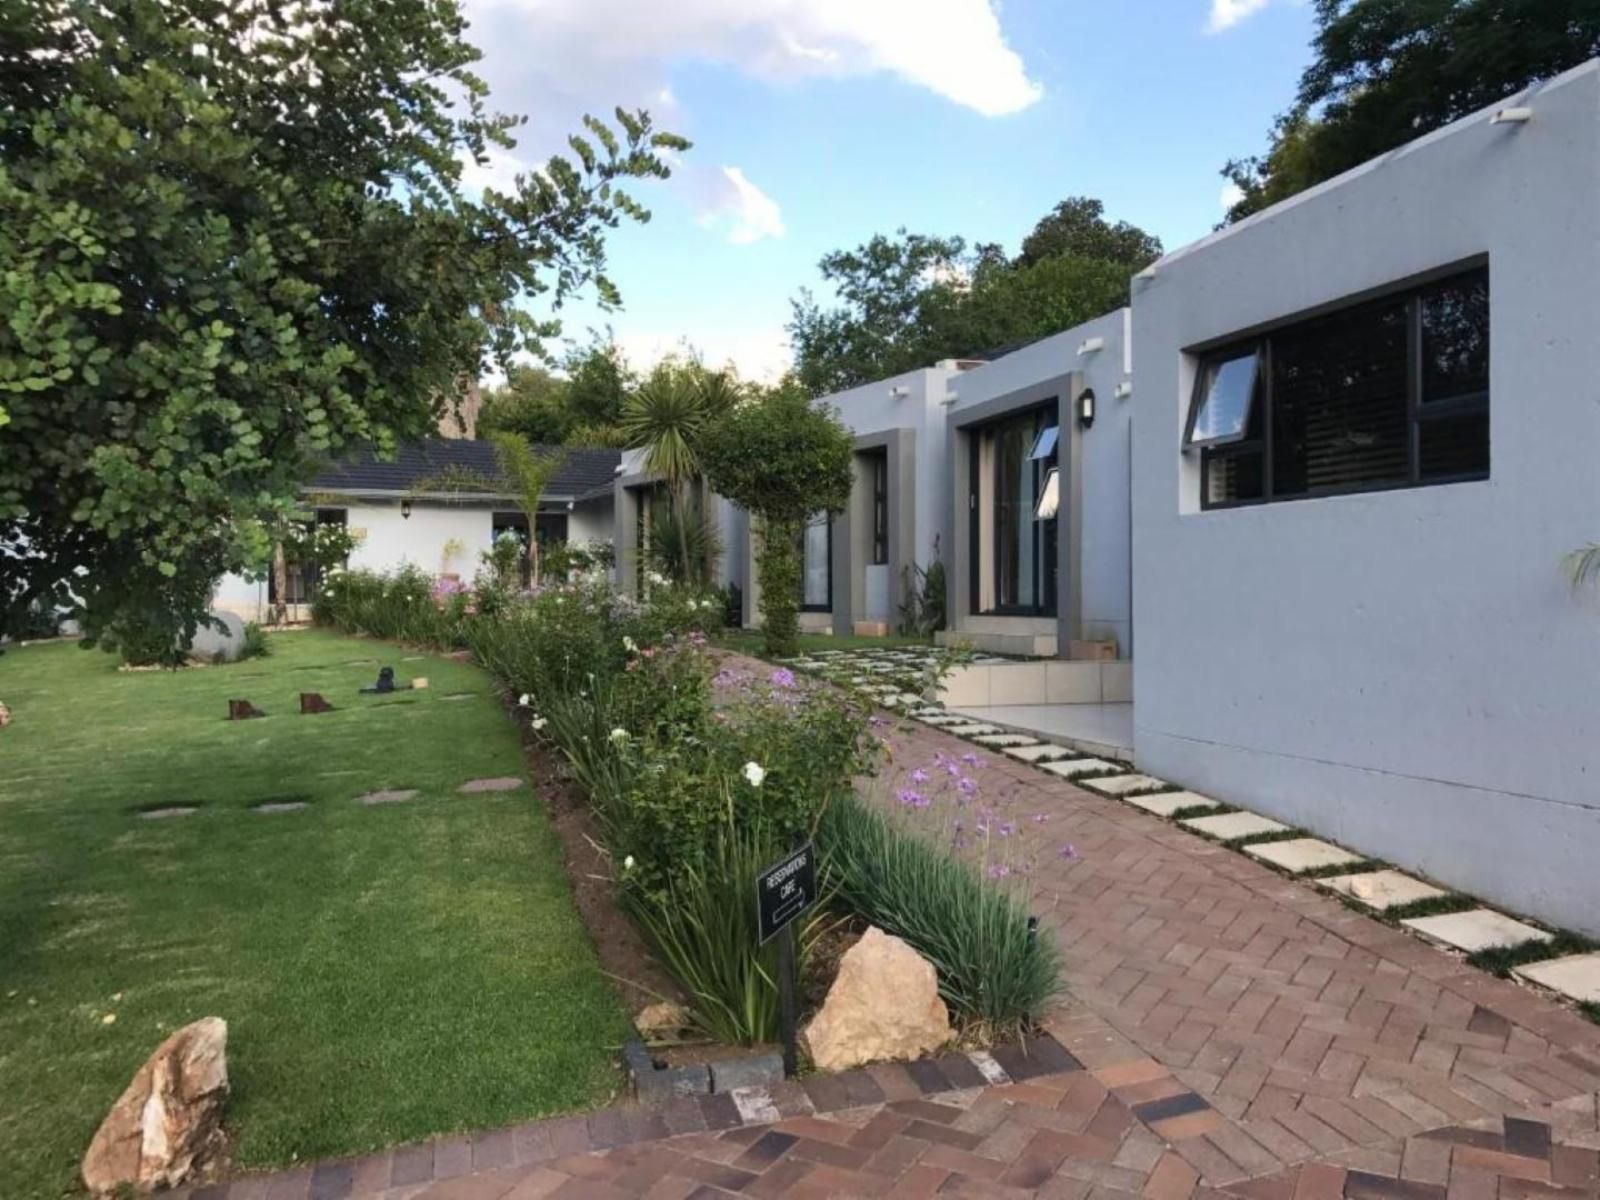 6 On Morris Guest Lodge Woodmead Johannesburg Gauteng South Africa House, Building, Architecture, Garden, Nature, Plant